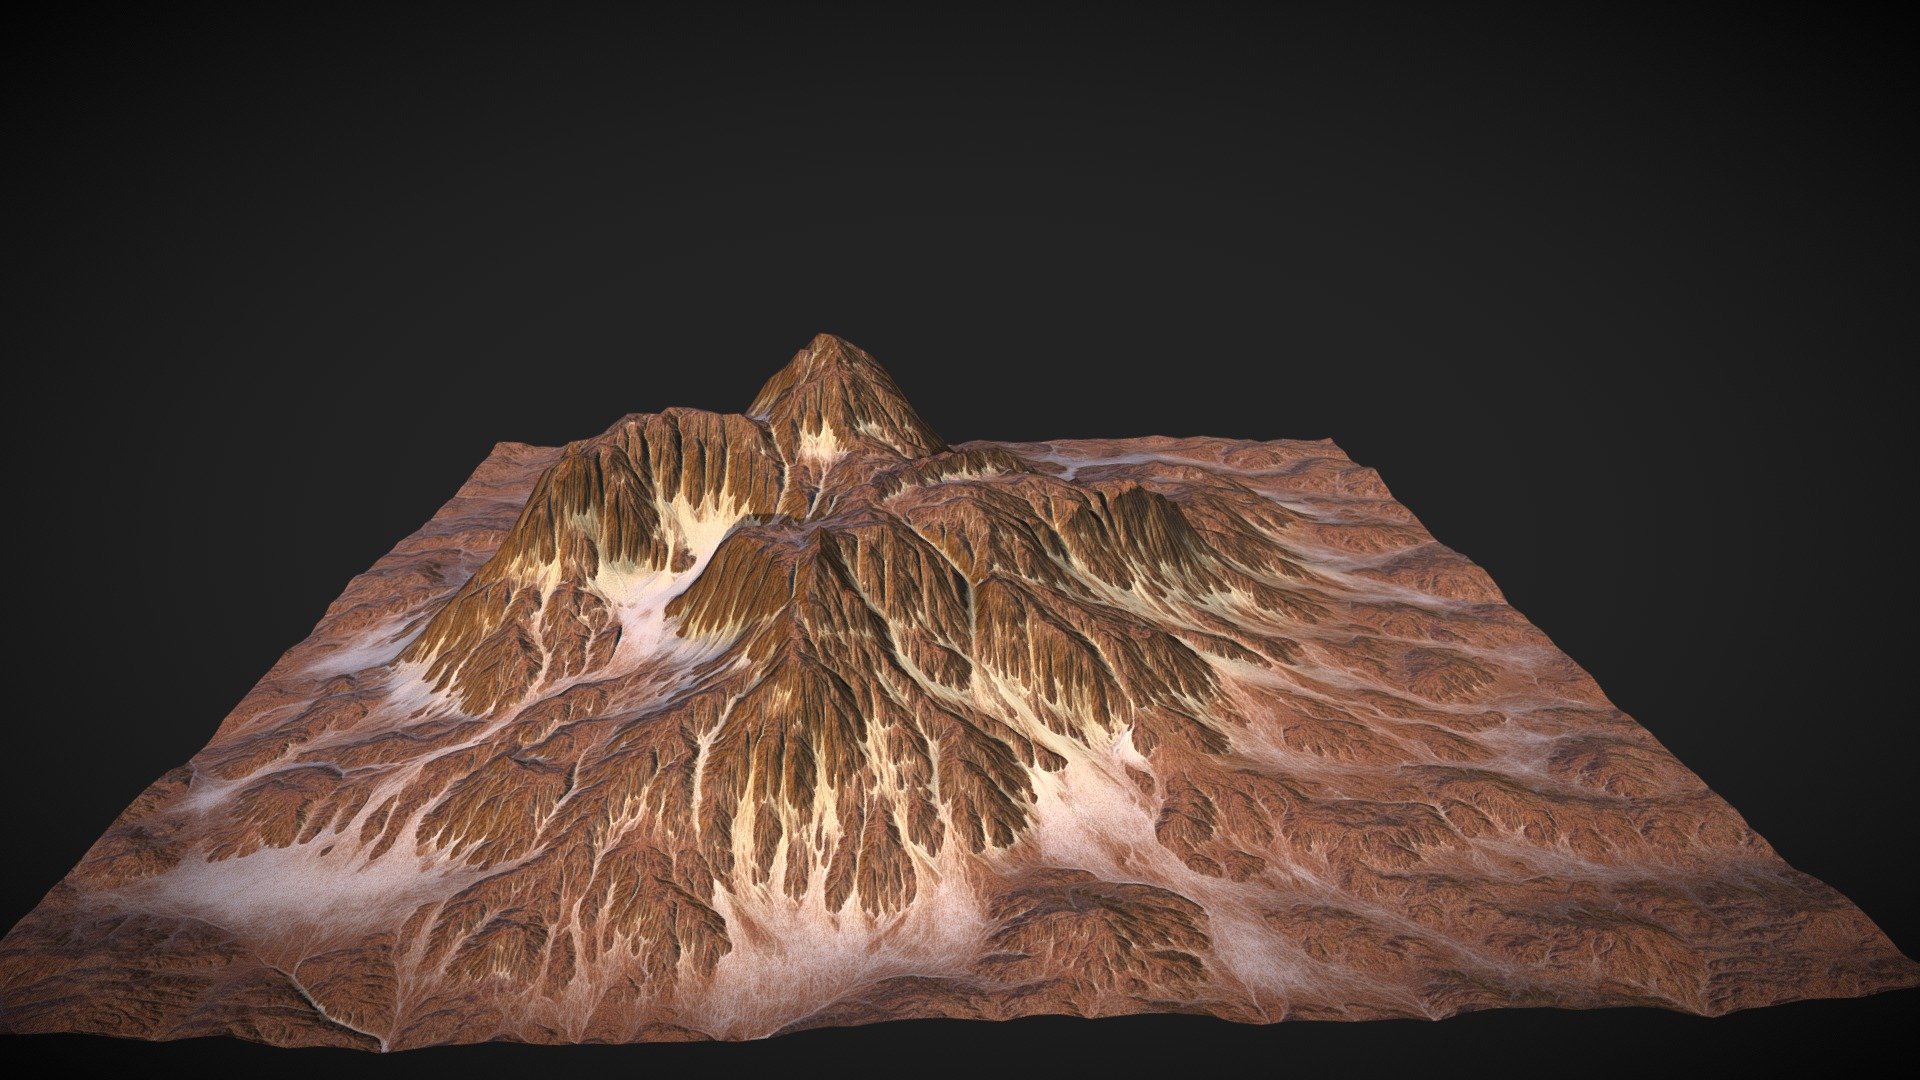 Low Poly Desert Mountain - Mesh
GameReady - Low Poly Desert Mountain - 3D model by Dario Ban (@NeoWick) 3d model